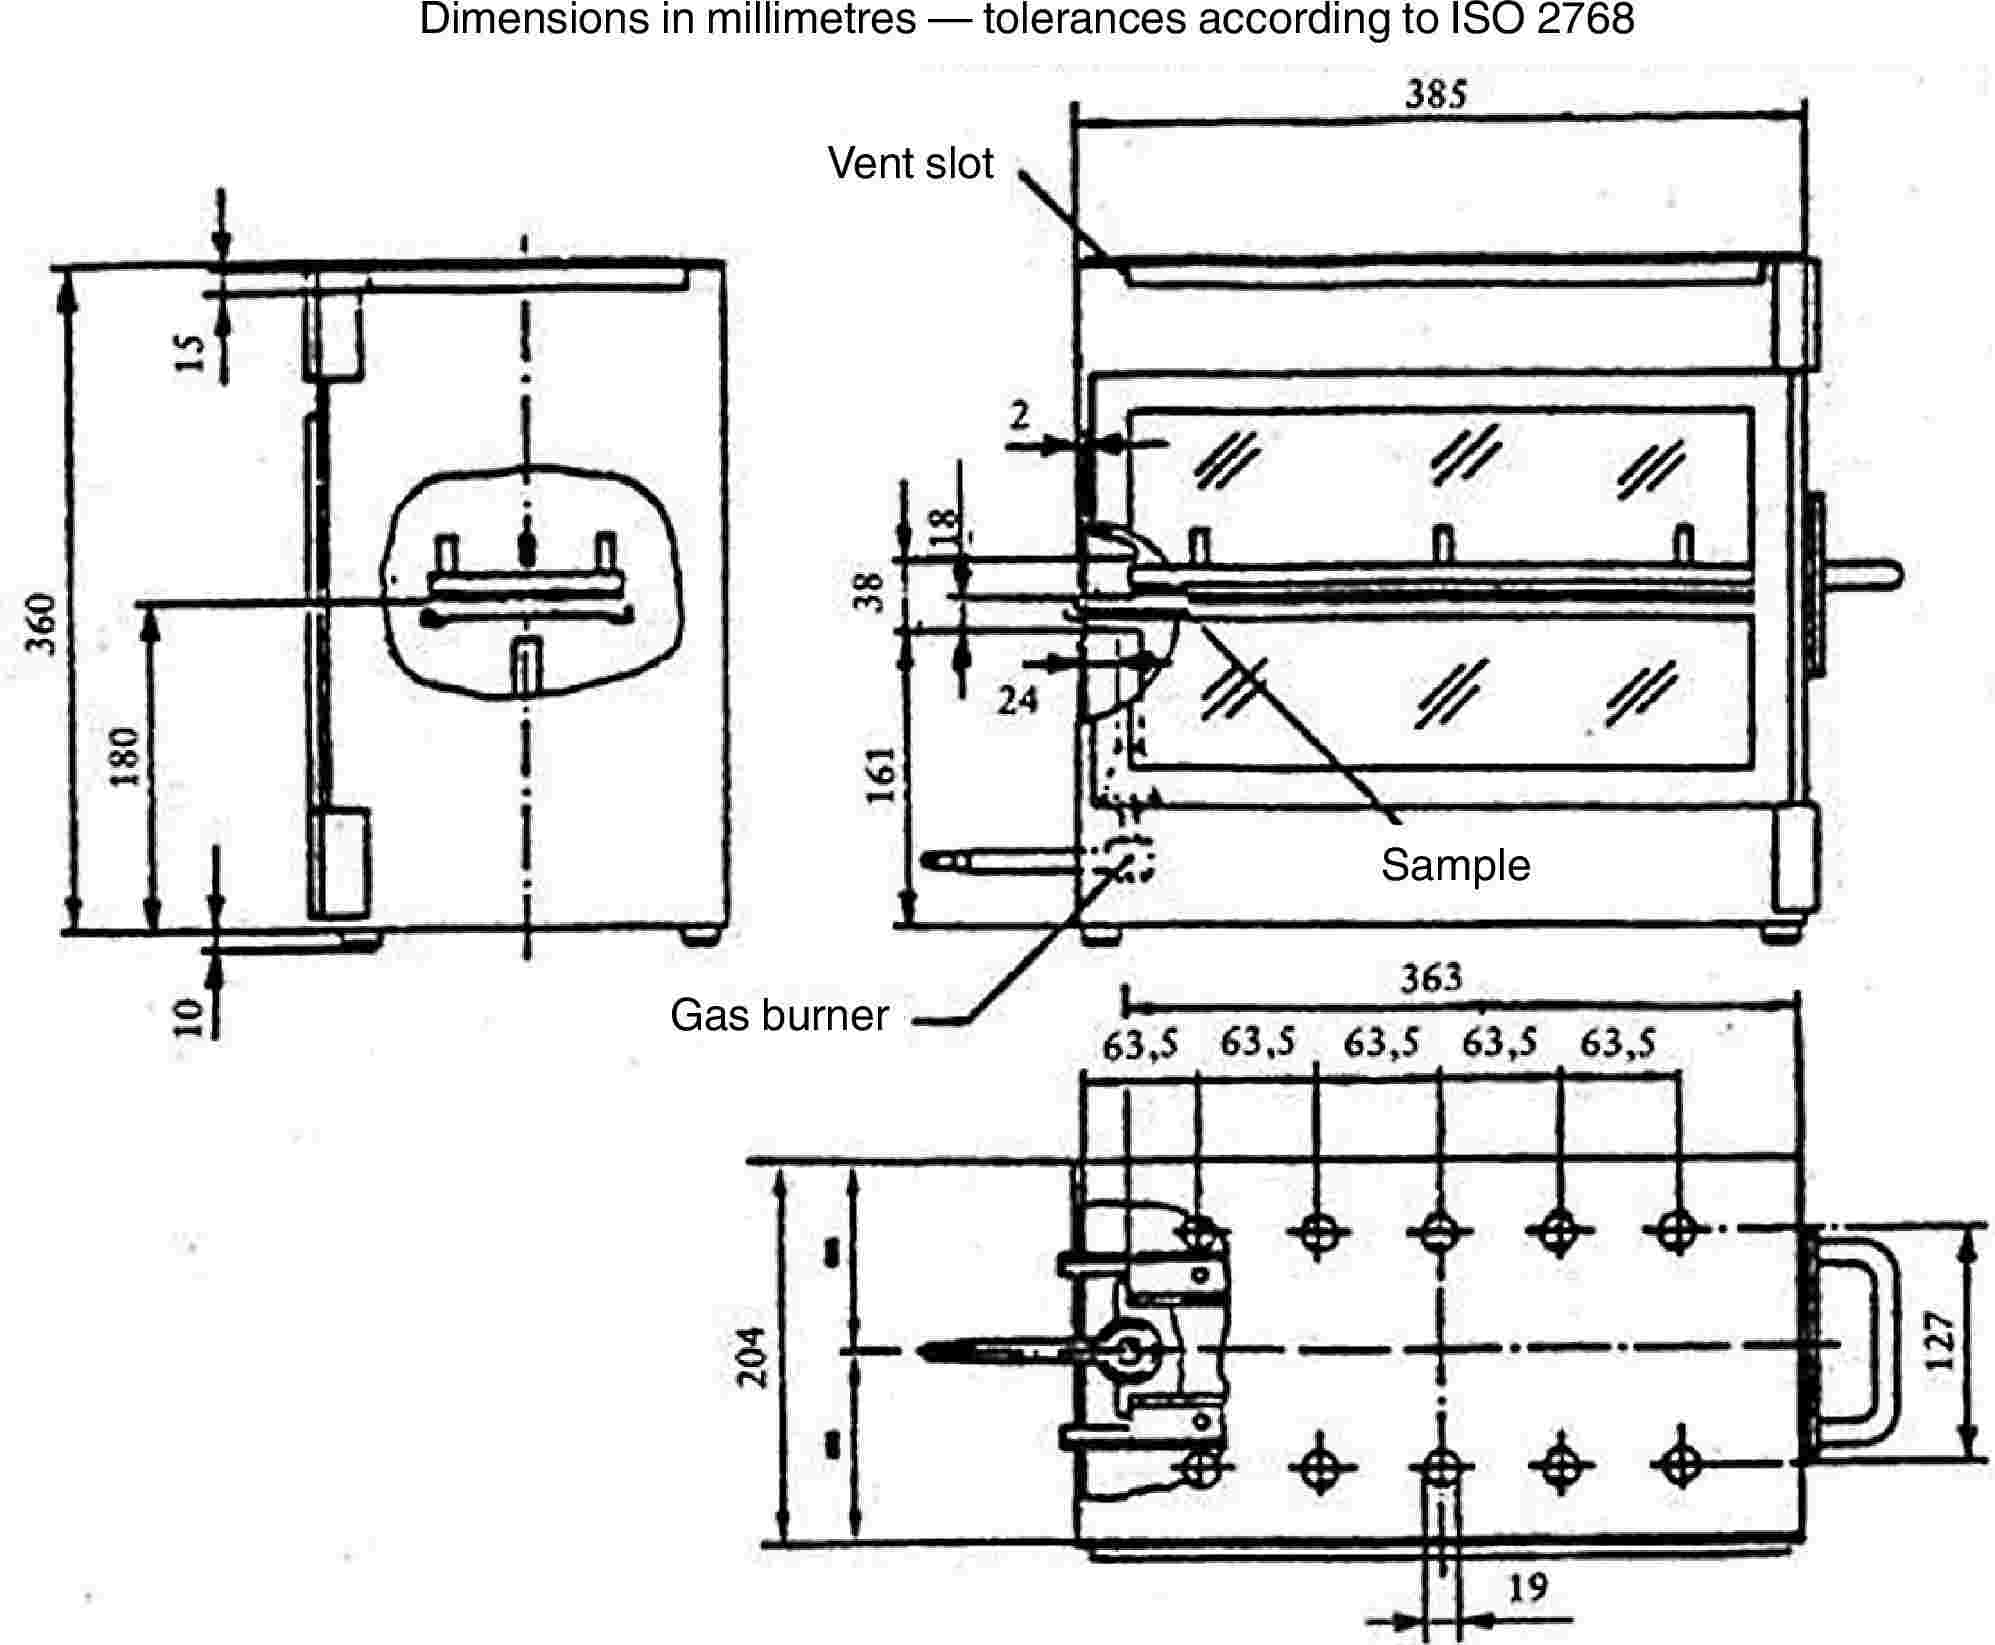 Dimensions in millimetres — tolerances according to ISO 2768Vent slotSampleGas burner